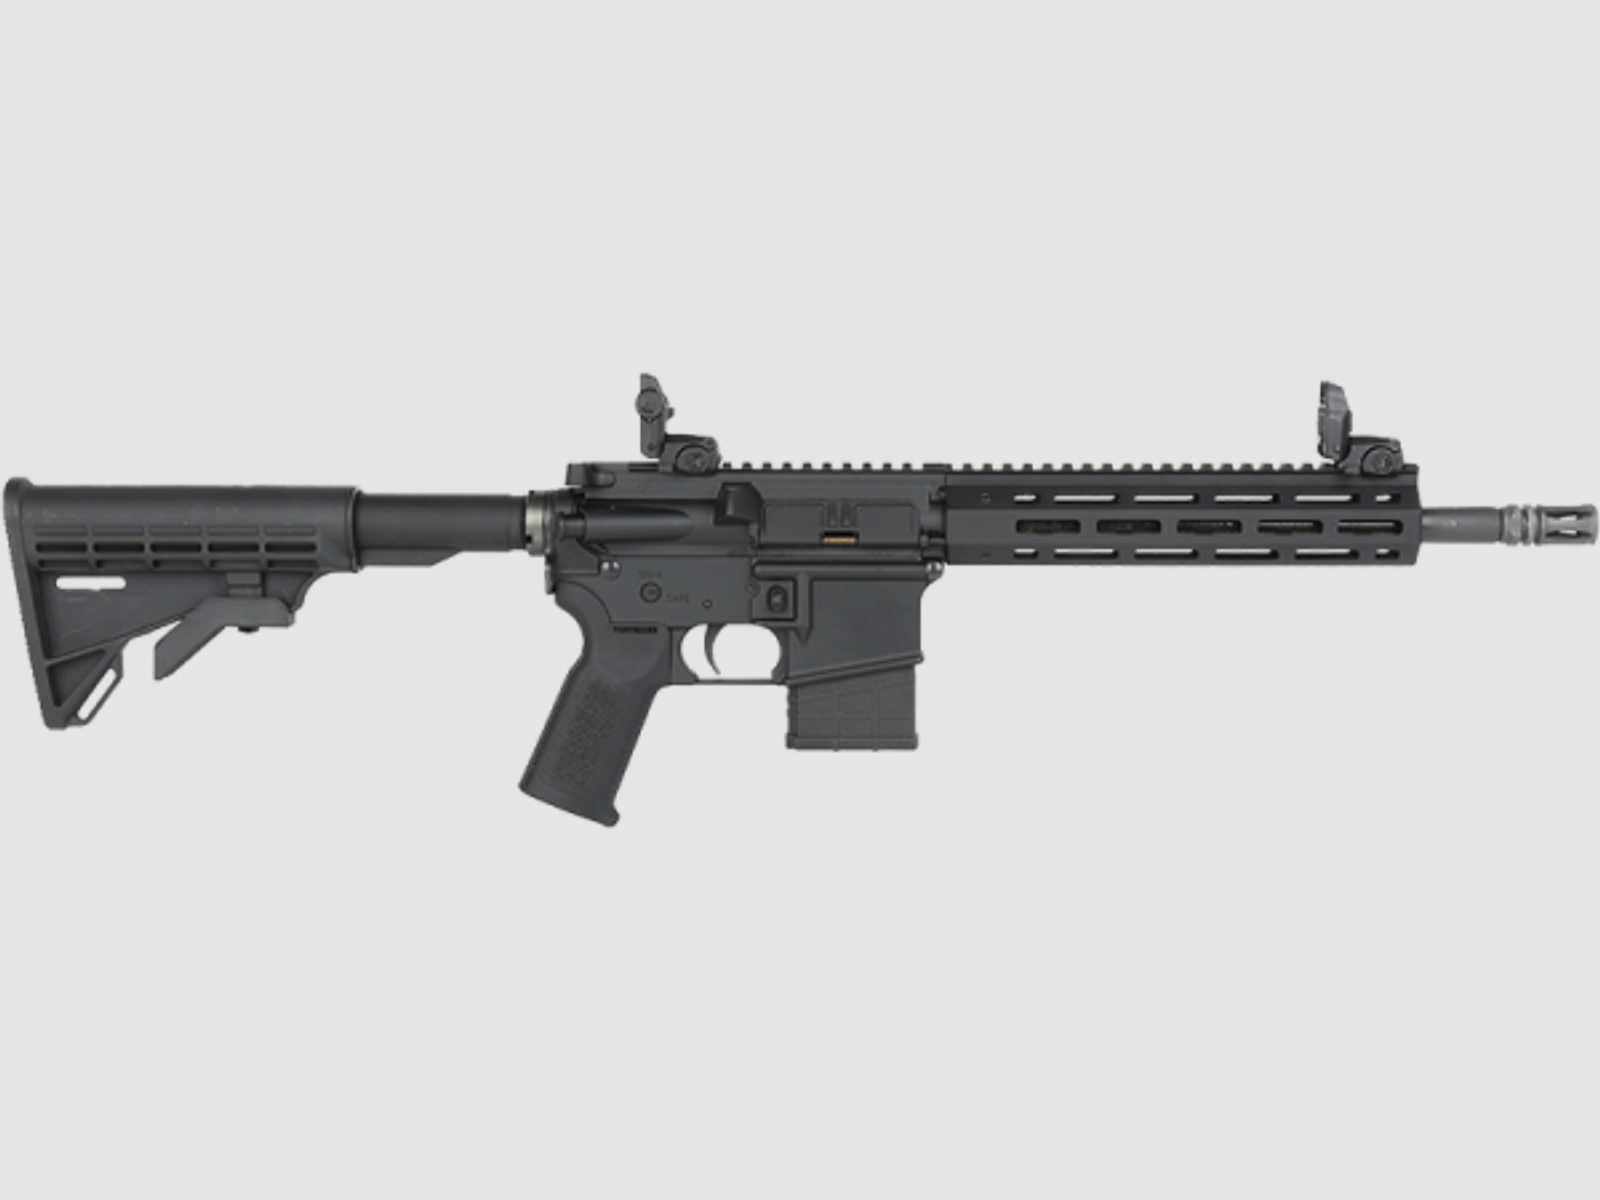 Tippmann Arms M4-22 Elite S Selbstladebüchse